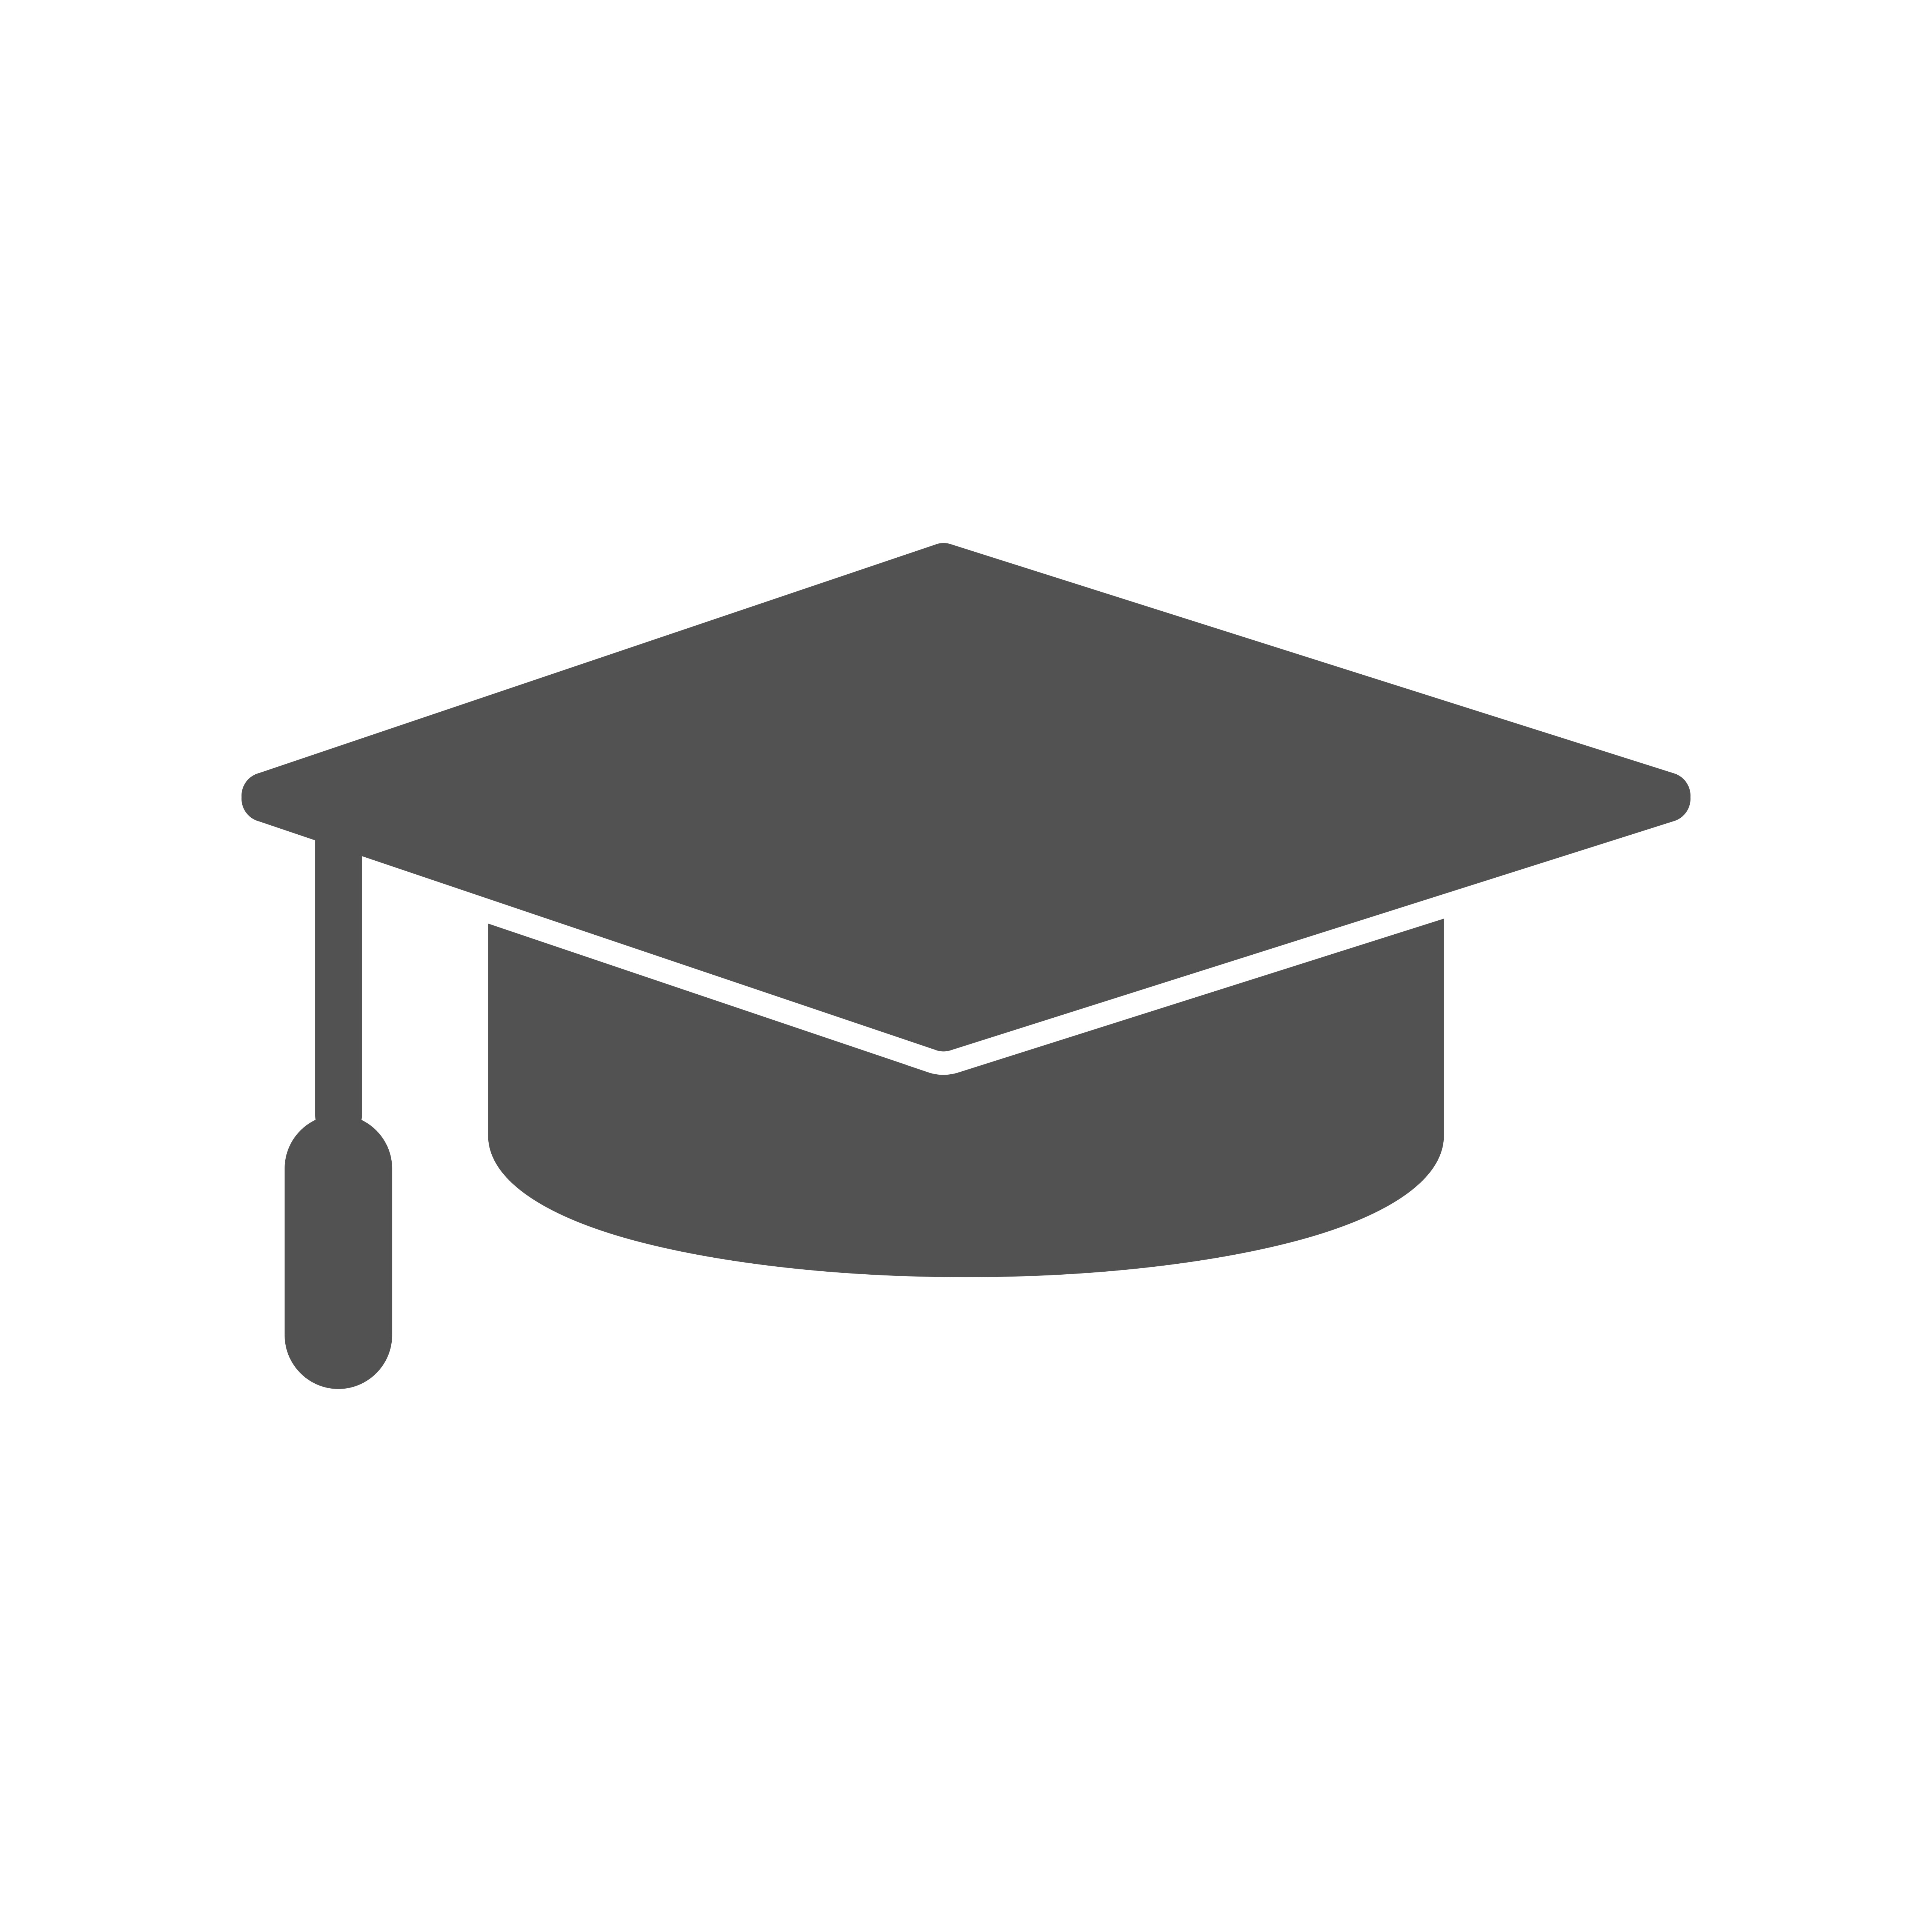 Graduation Hat Graduation Cap Icon Free Download And Vector Clipart ...